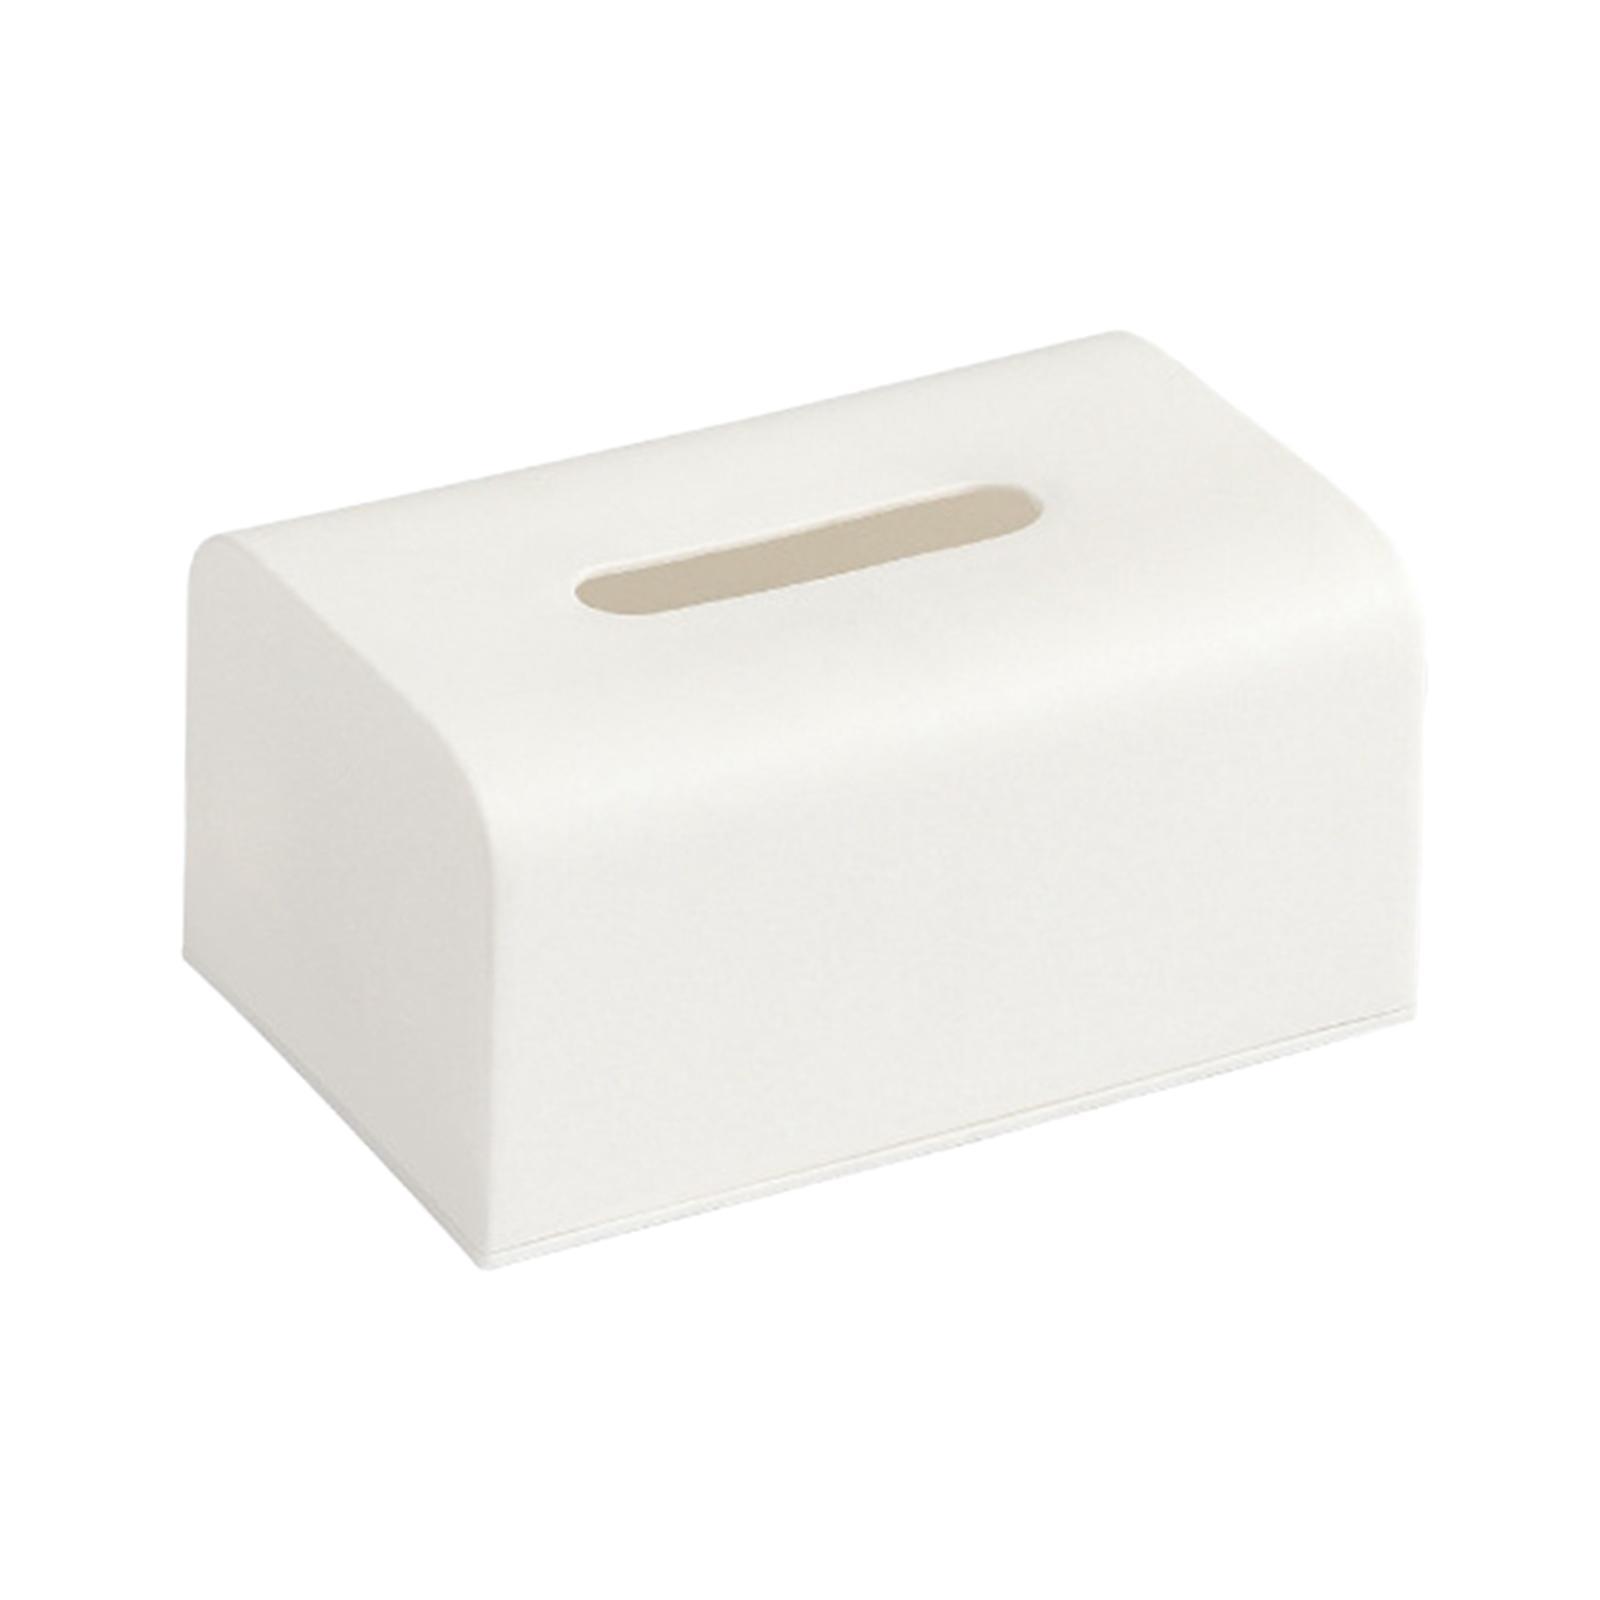 Tissue Dispenser Box Bathroom Toilet Paper Holder Tissue Paper Holder Tissue Cover Removable Tissue Box Tissue Box Cover for Washroom Office